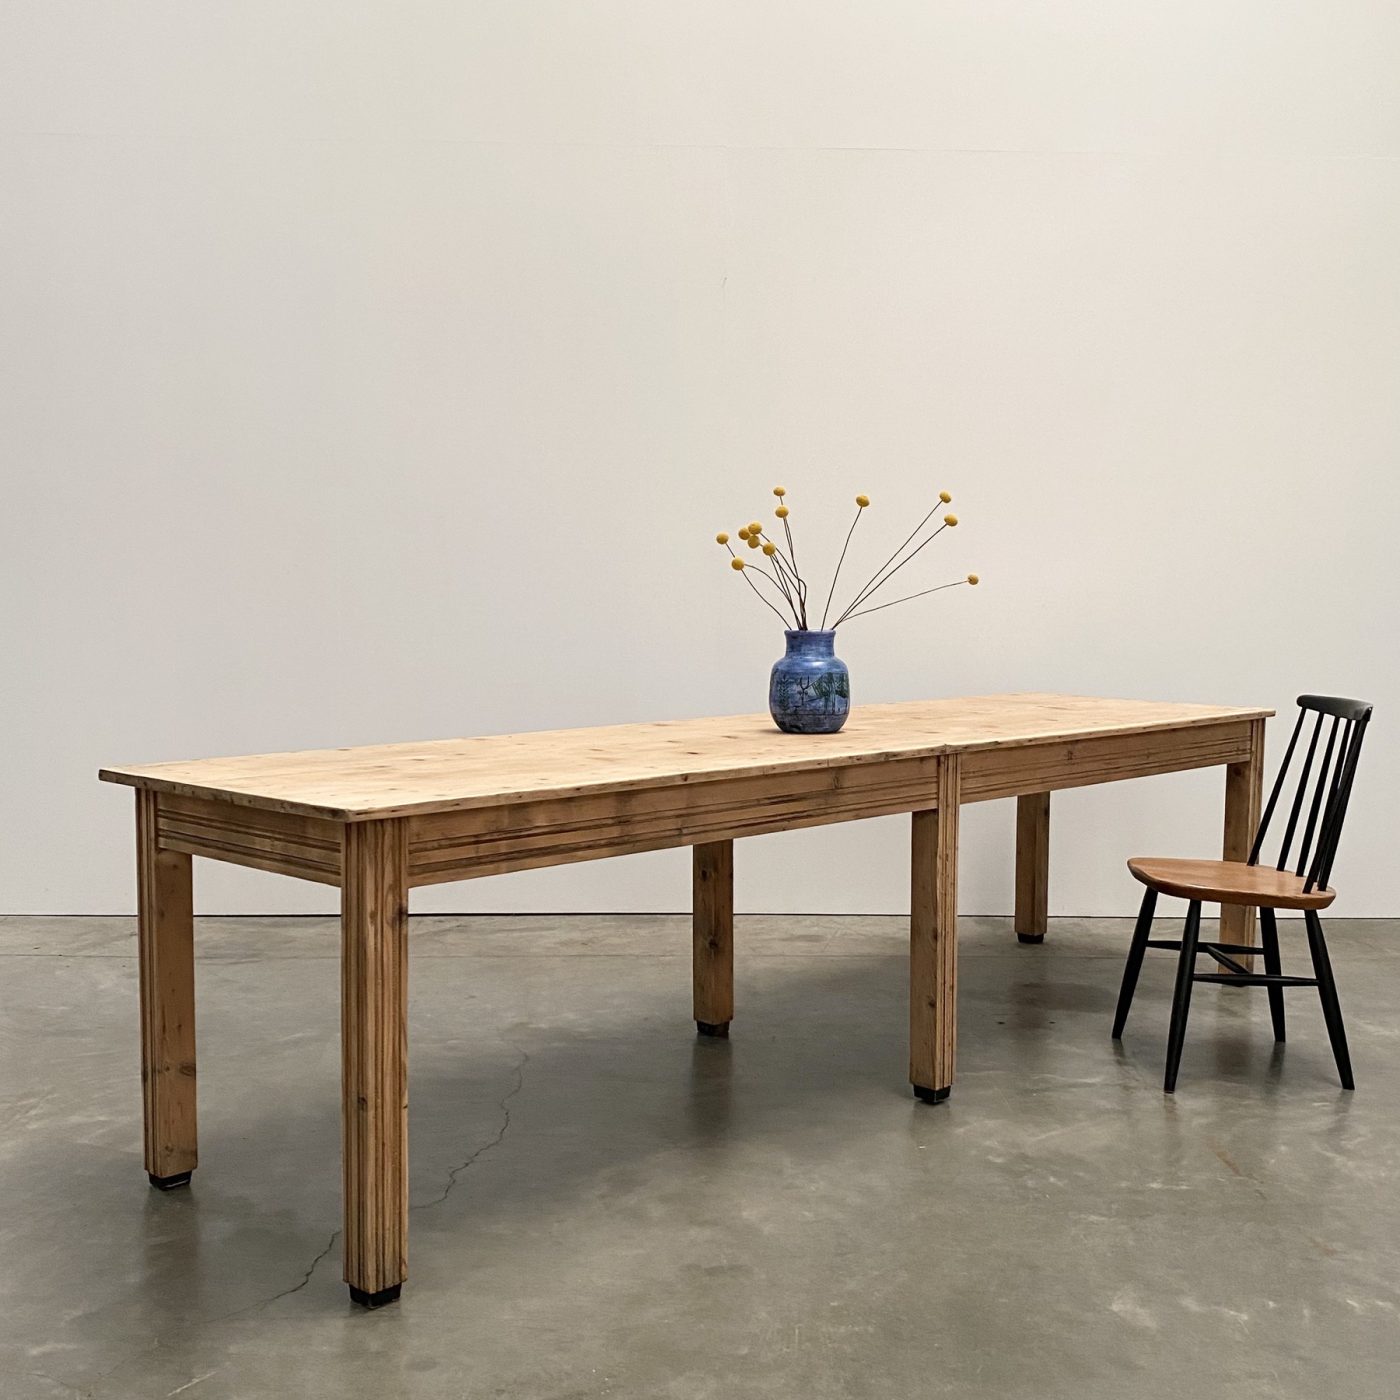 objet-vagabond-office-table0000